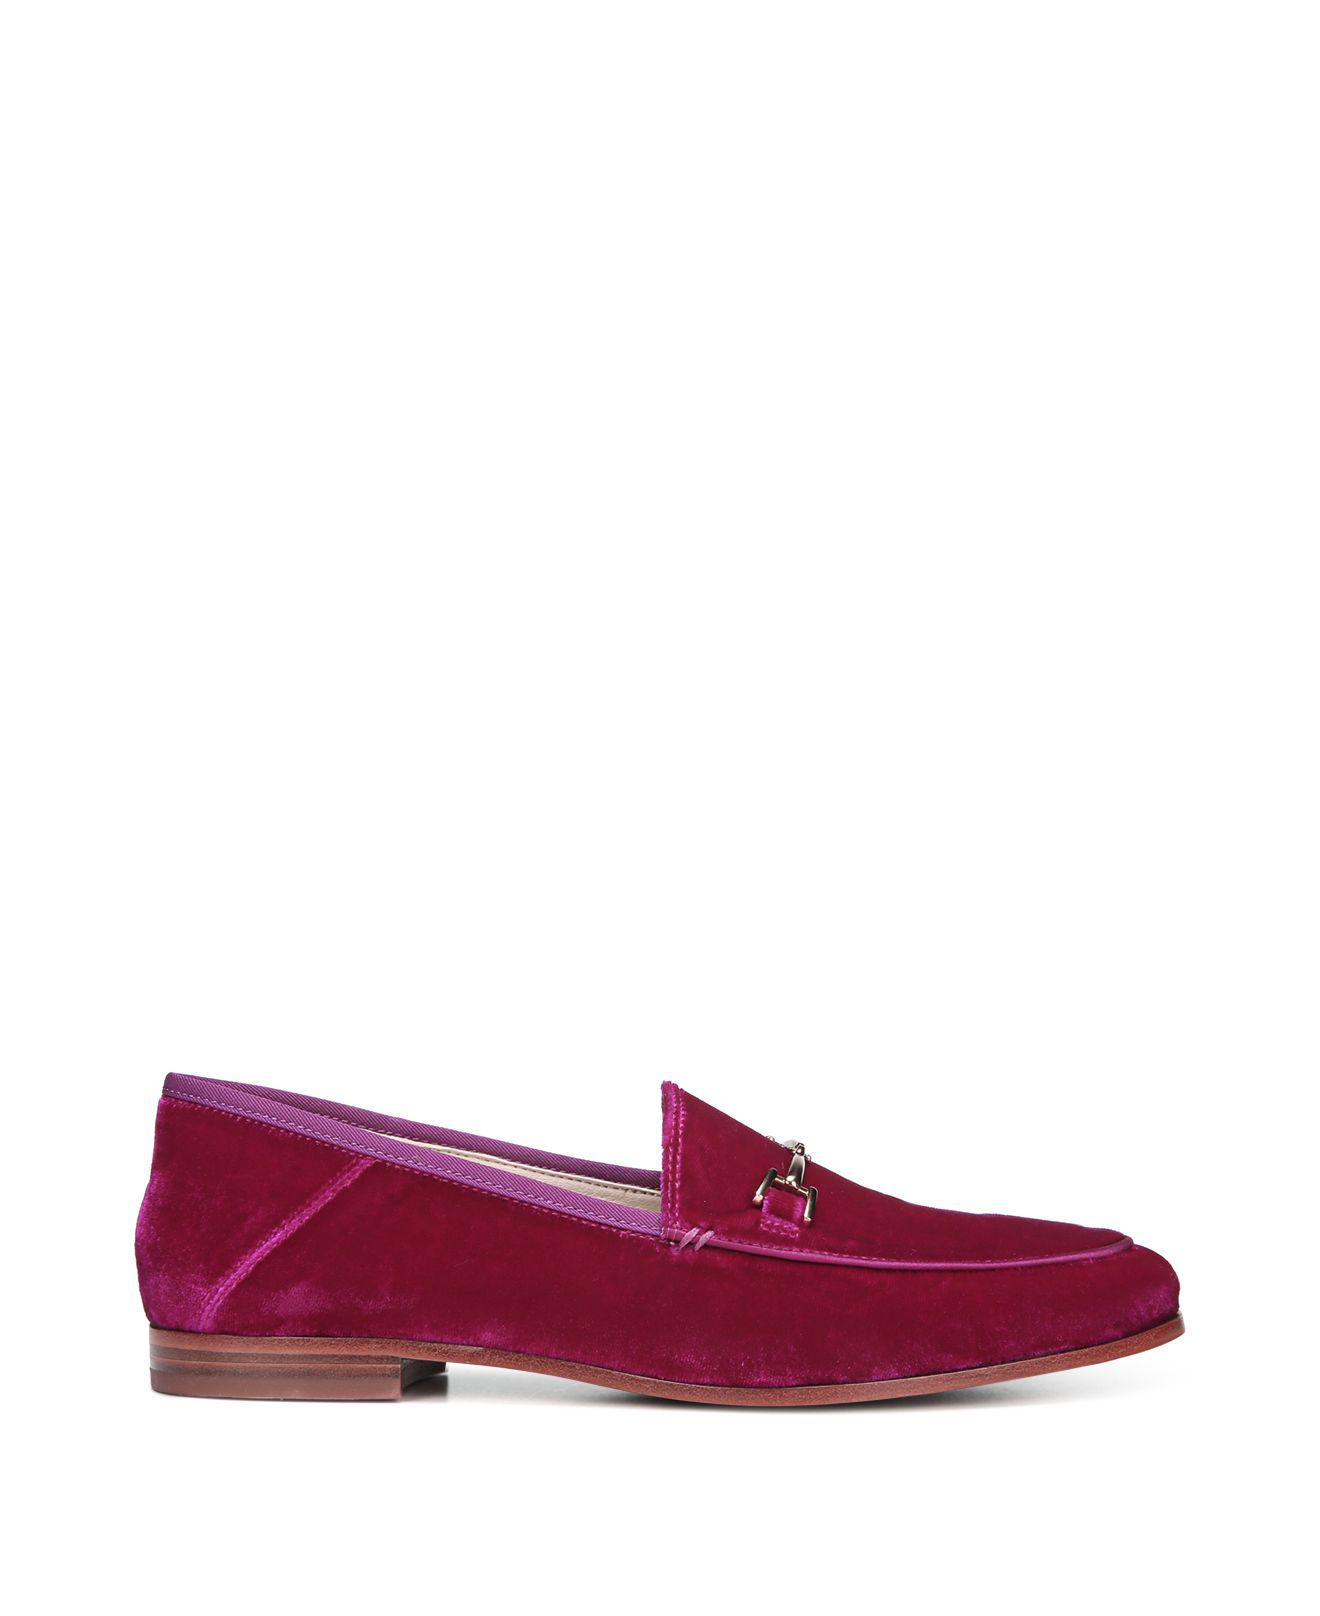 Lyst - Sam Edelman Women's Loraine Velvet Loafers in Pink